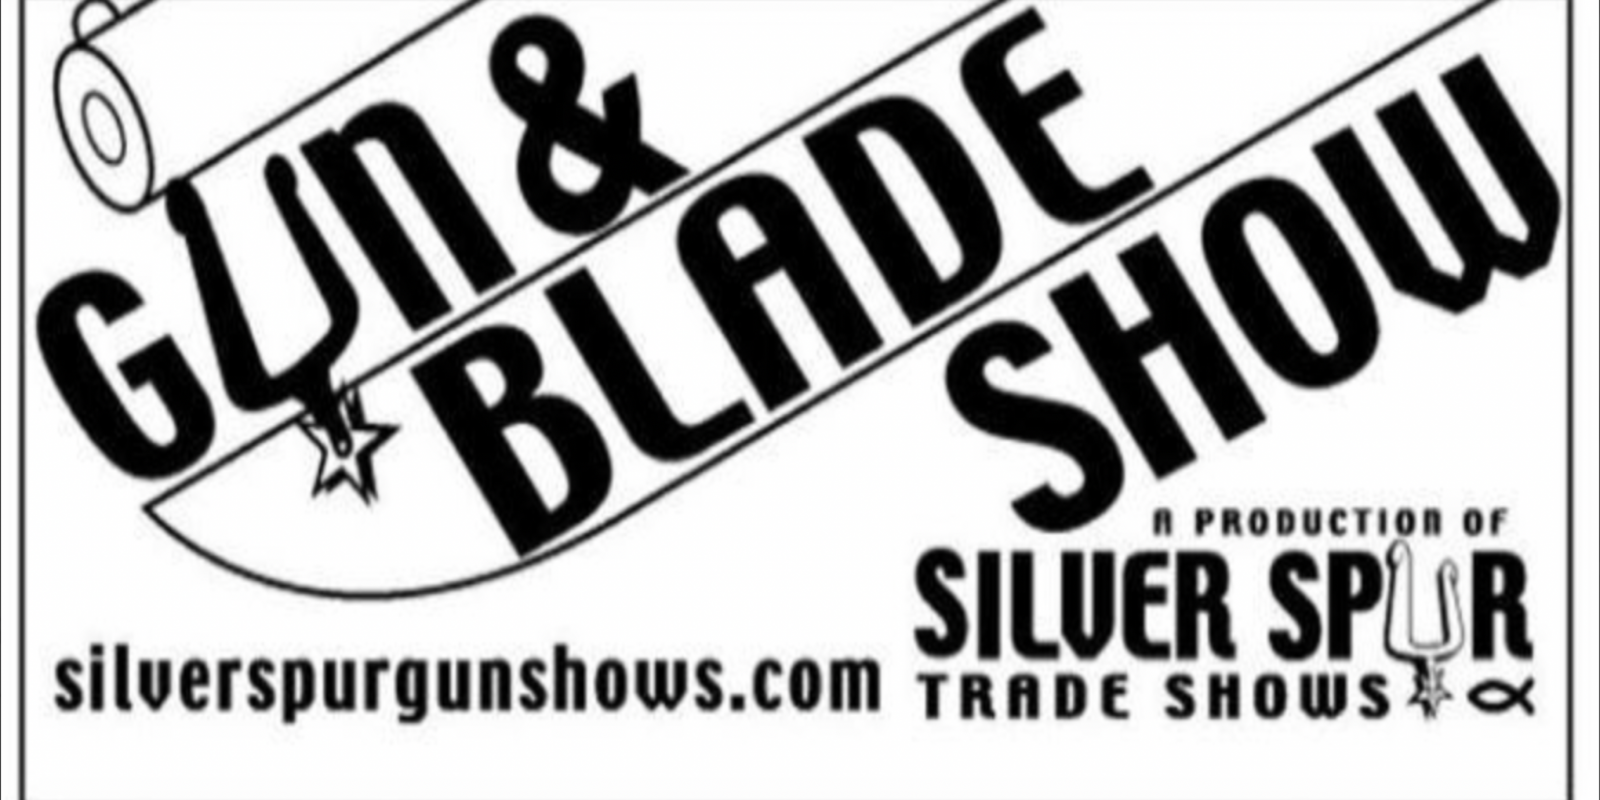 San Angelo Gun and Blade Show